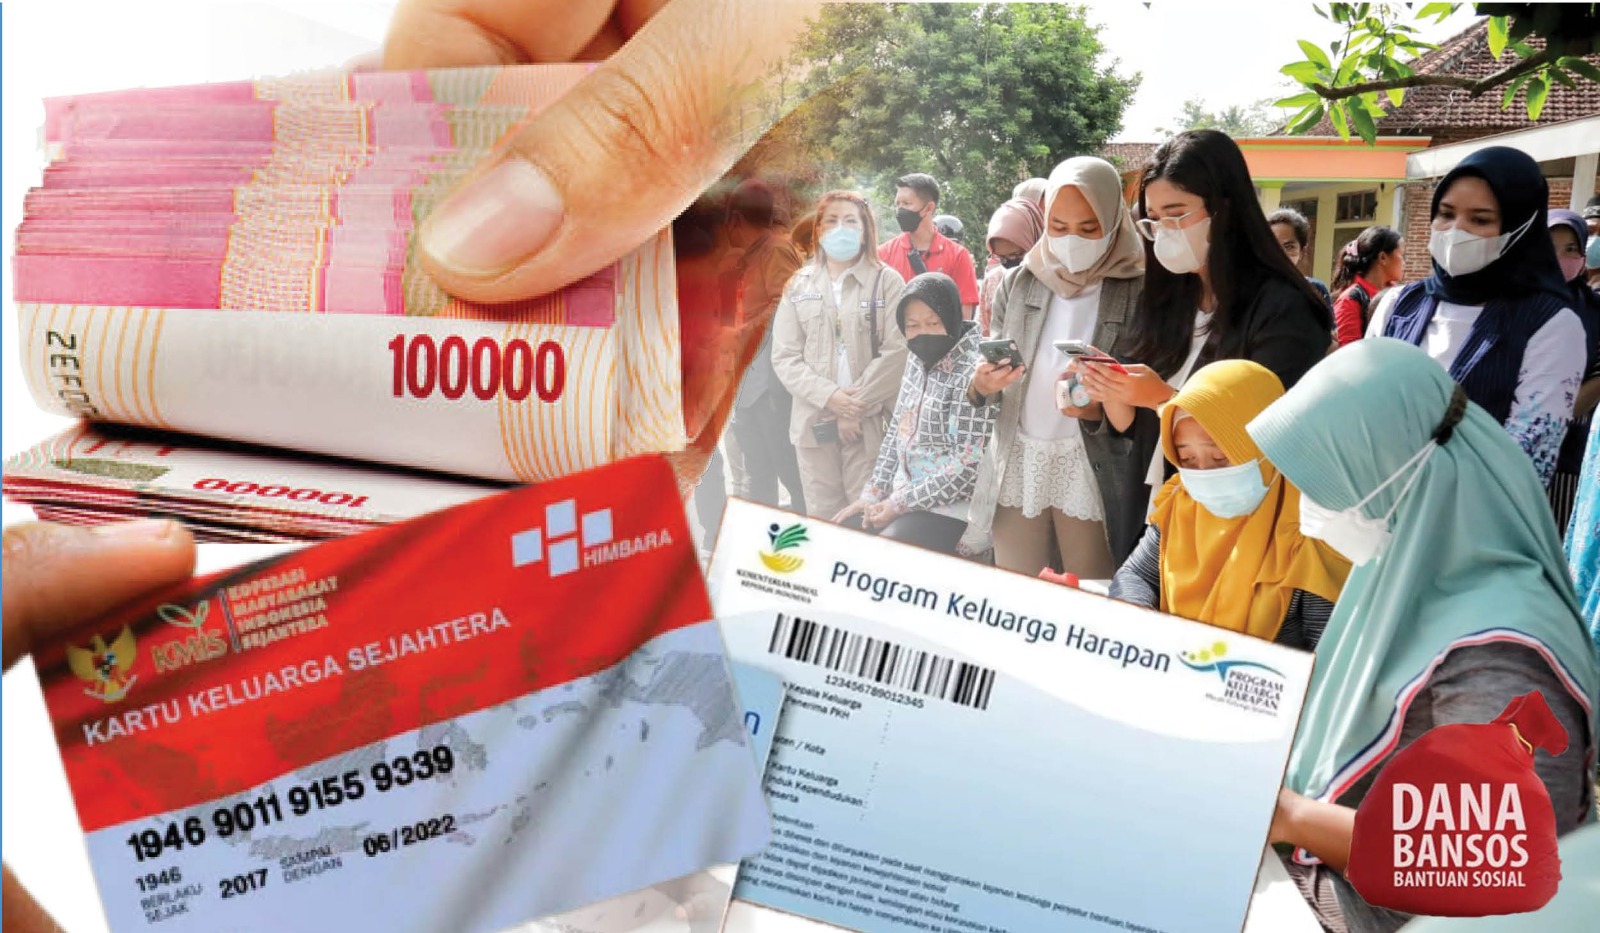 Siap-siap! Bansos Tambahan Senilai Rp400.000 Cair untuk 18,8 Juta Keluarga Miskin, Ambilnya di Sini Ya